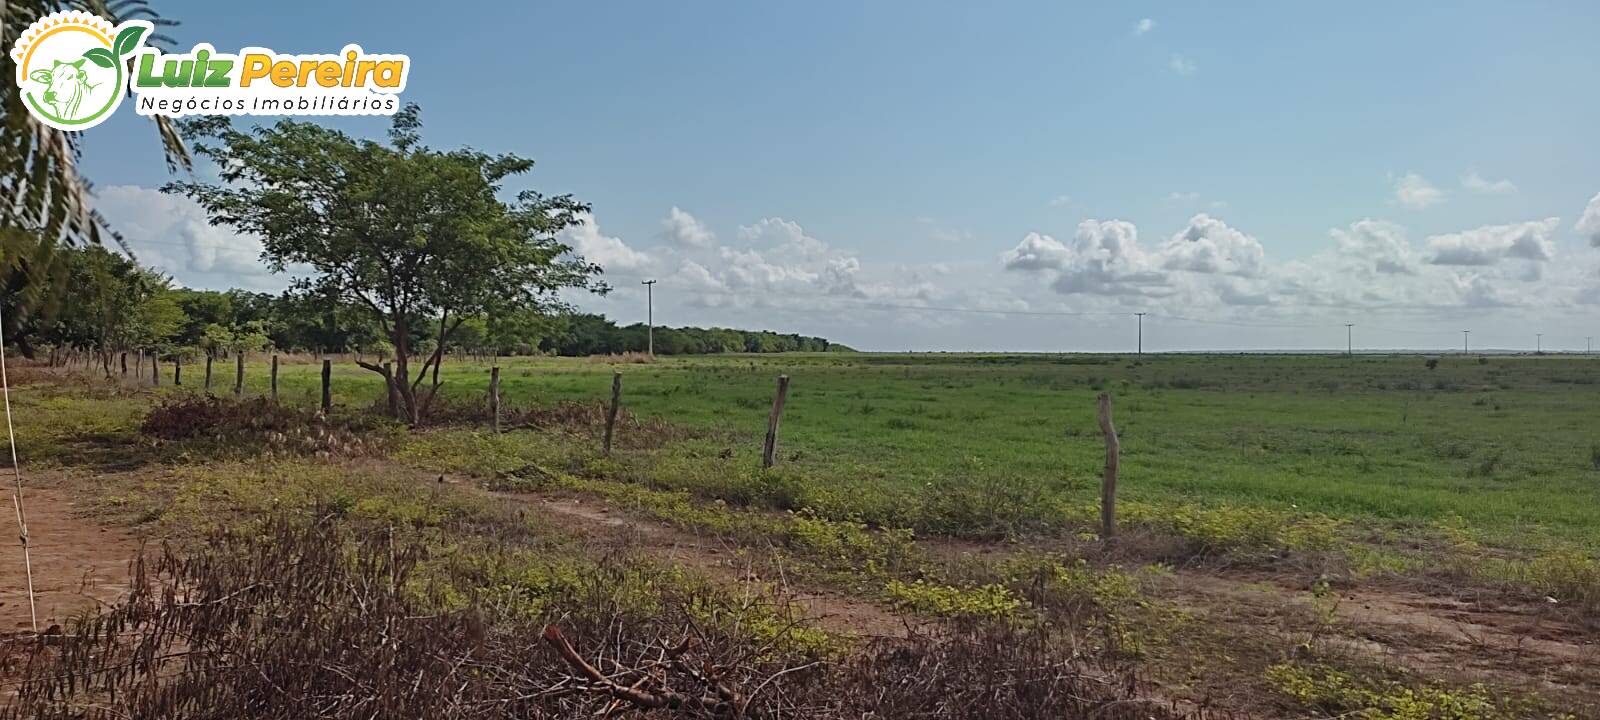 Fazenda-Sítio-Chácara, 910 hectares - Foto 3